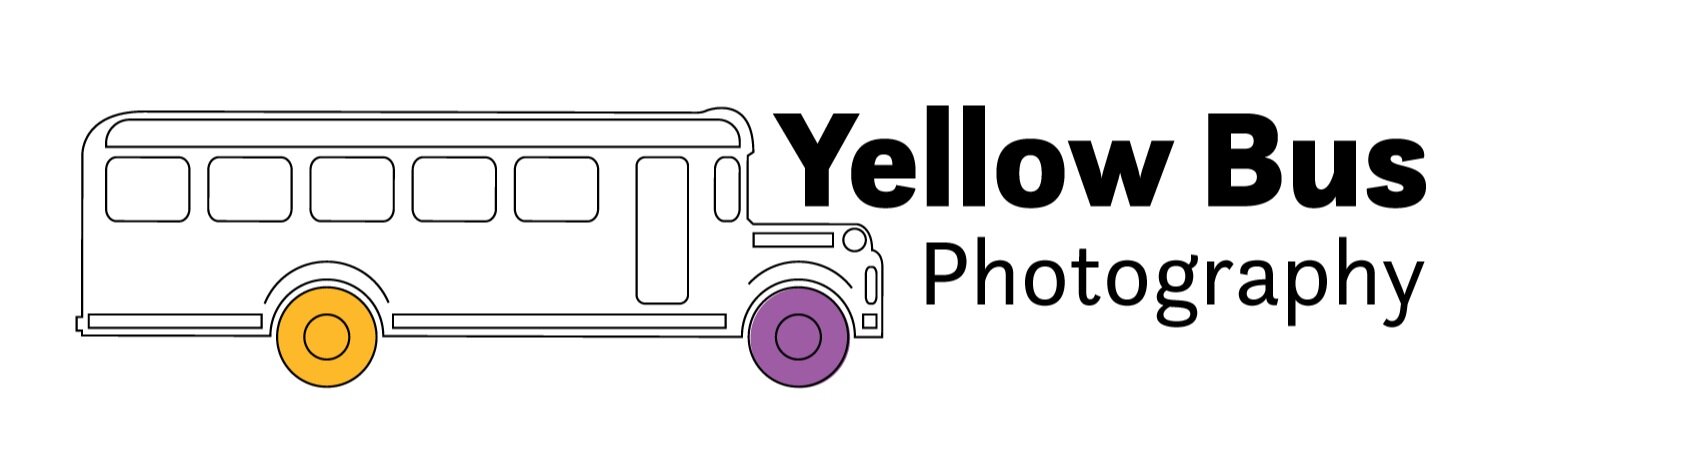 Yellow Bus Photographers